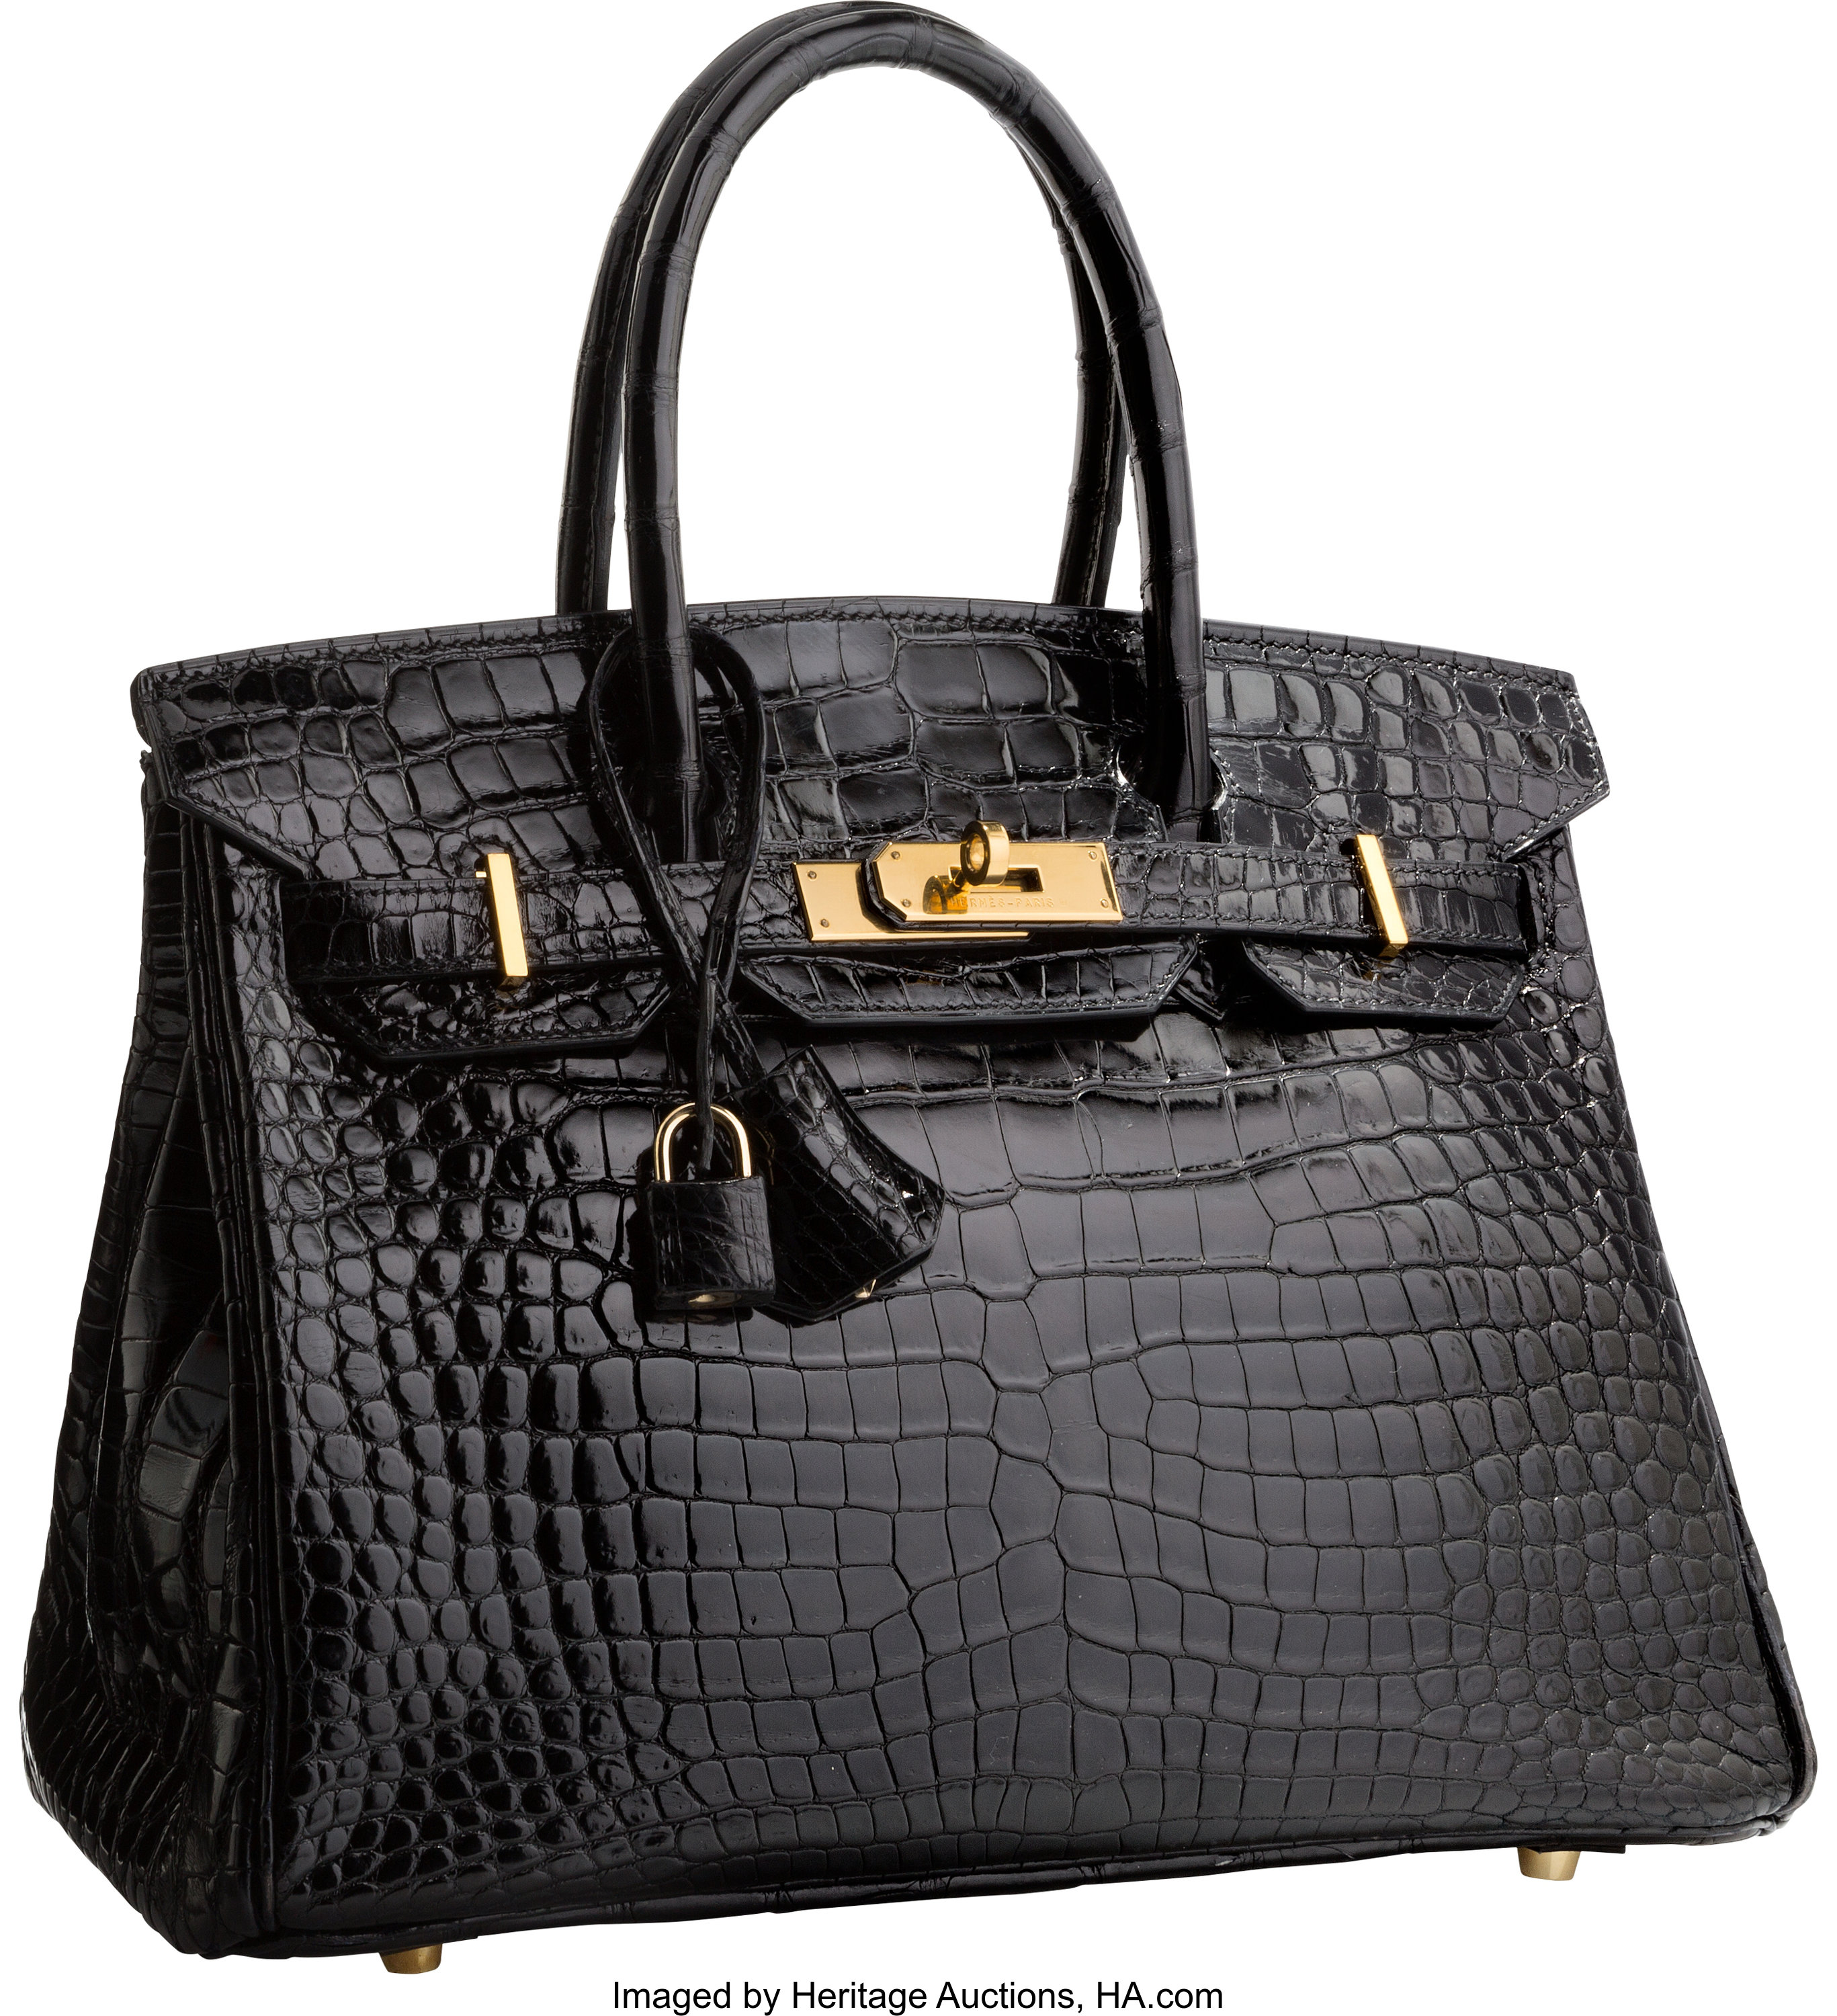 Hermes 30cm Shiny Black Porosus Crocodile Birkin Bag with Gold | Lot #58102 | Heritage Auctions